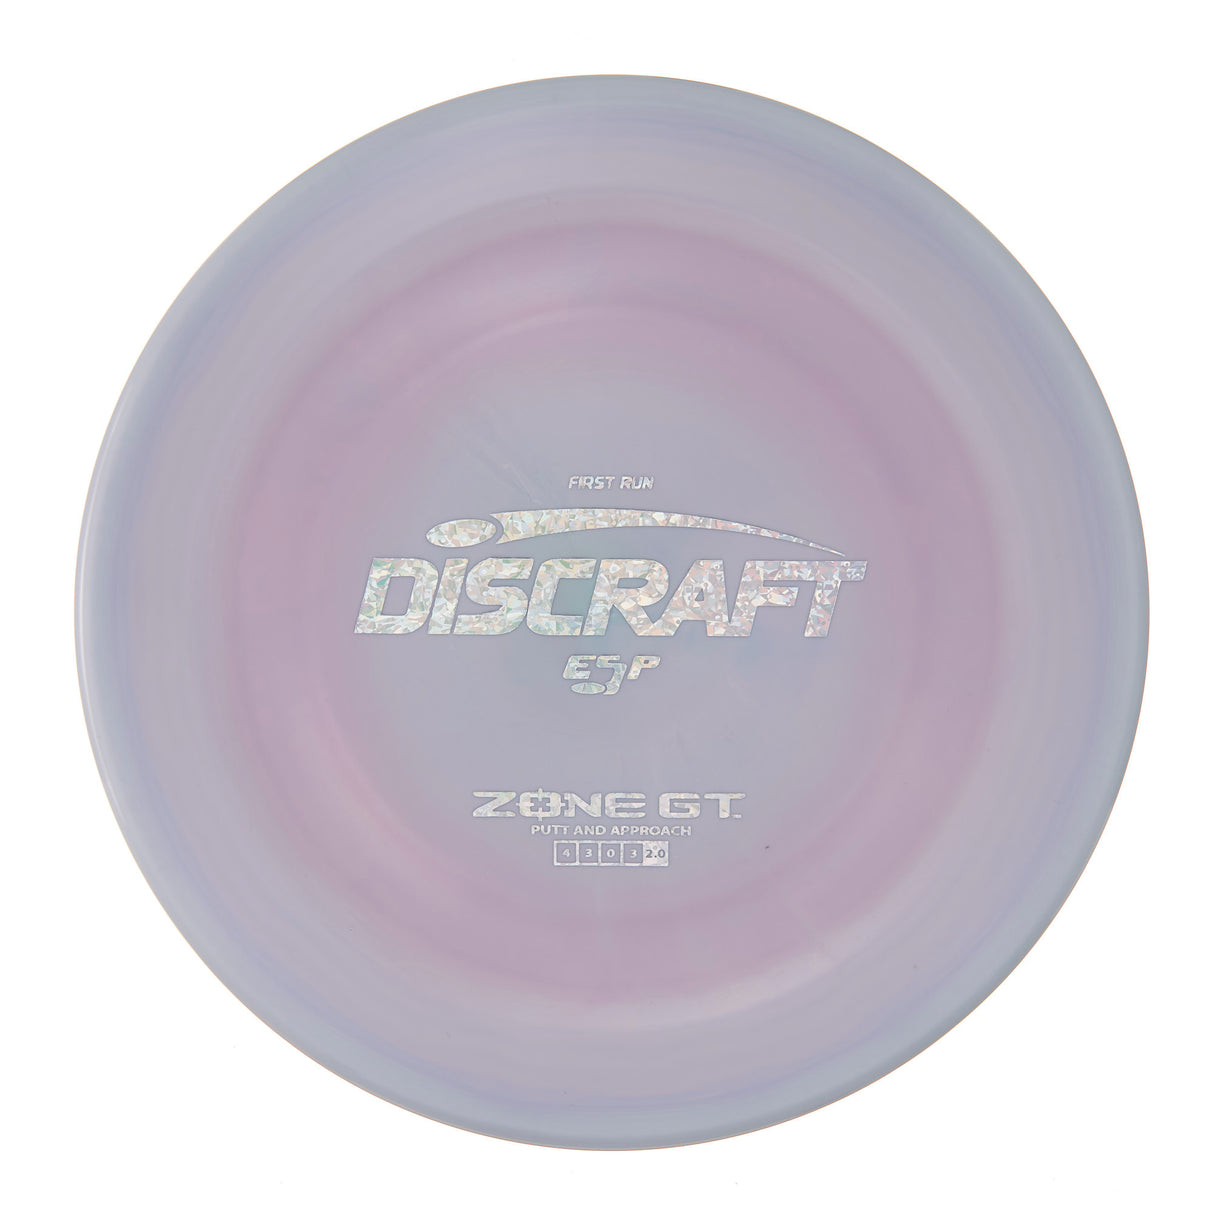 Discraft Zone GT - First Run ESP 173g | Style 0012